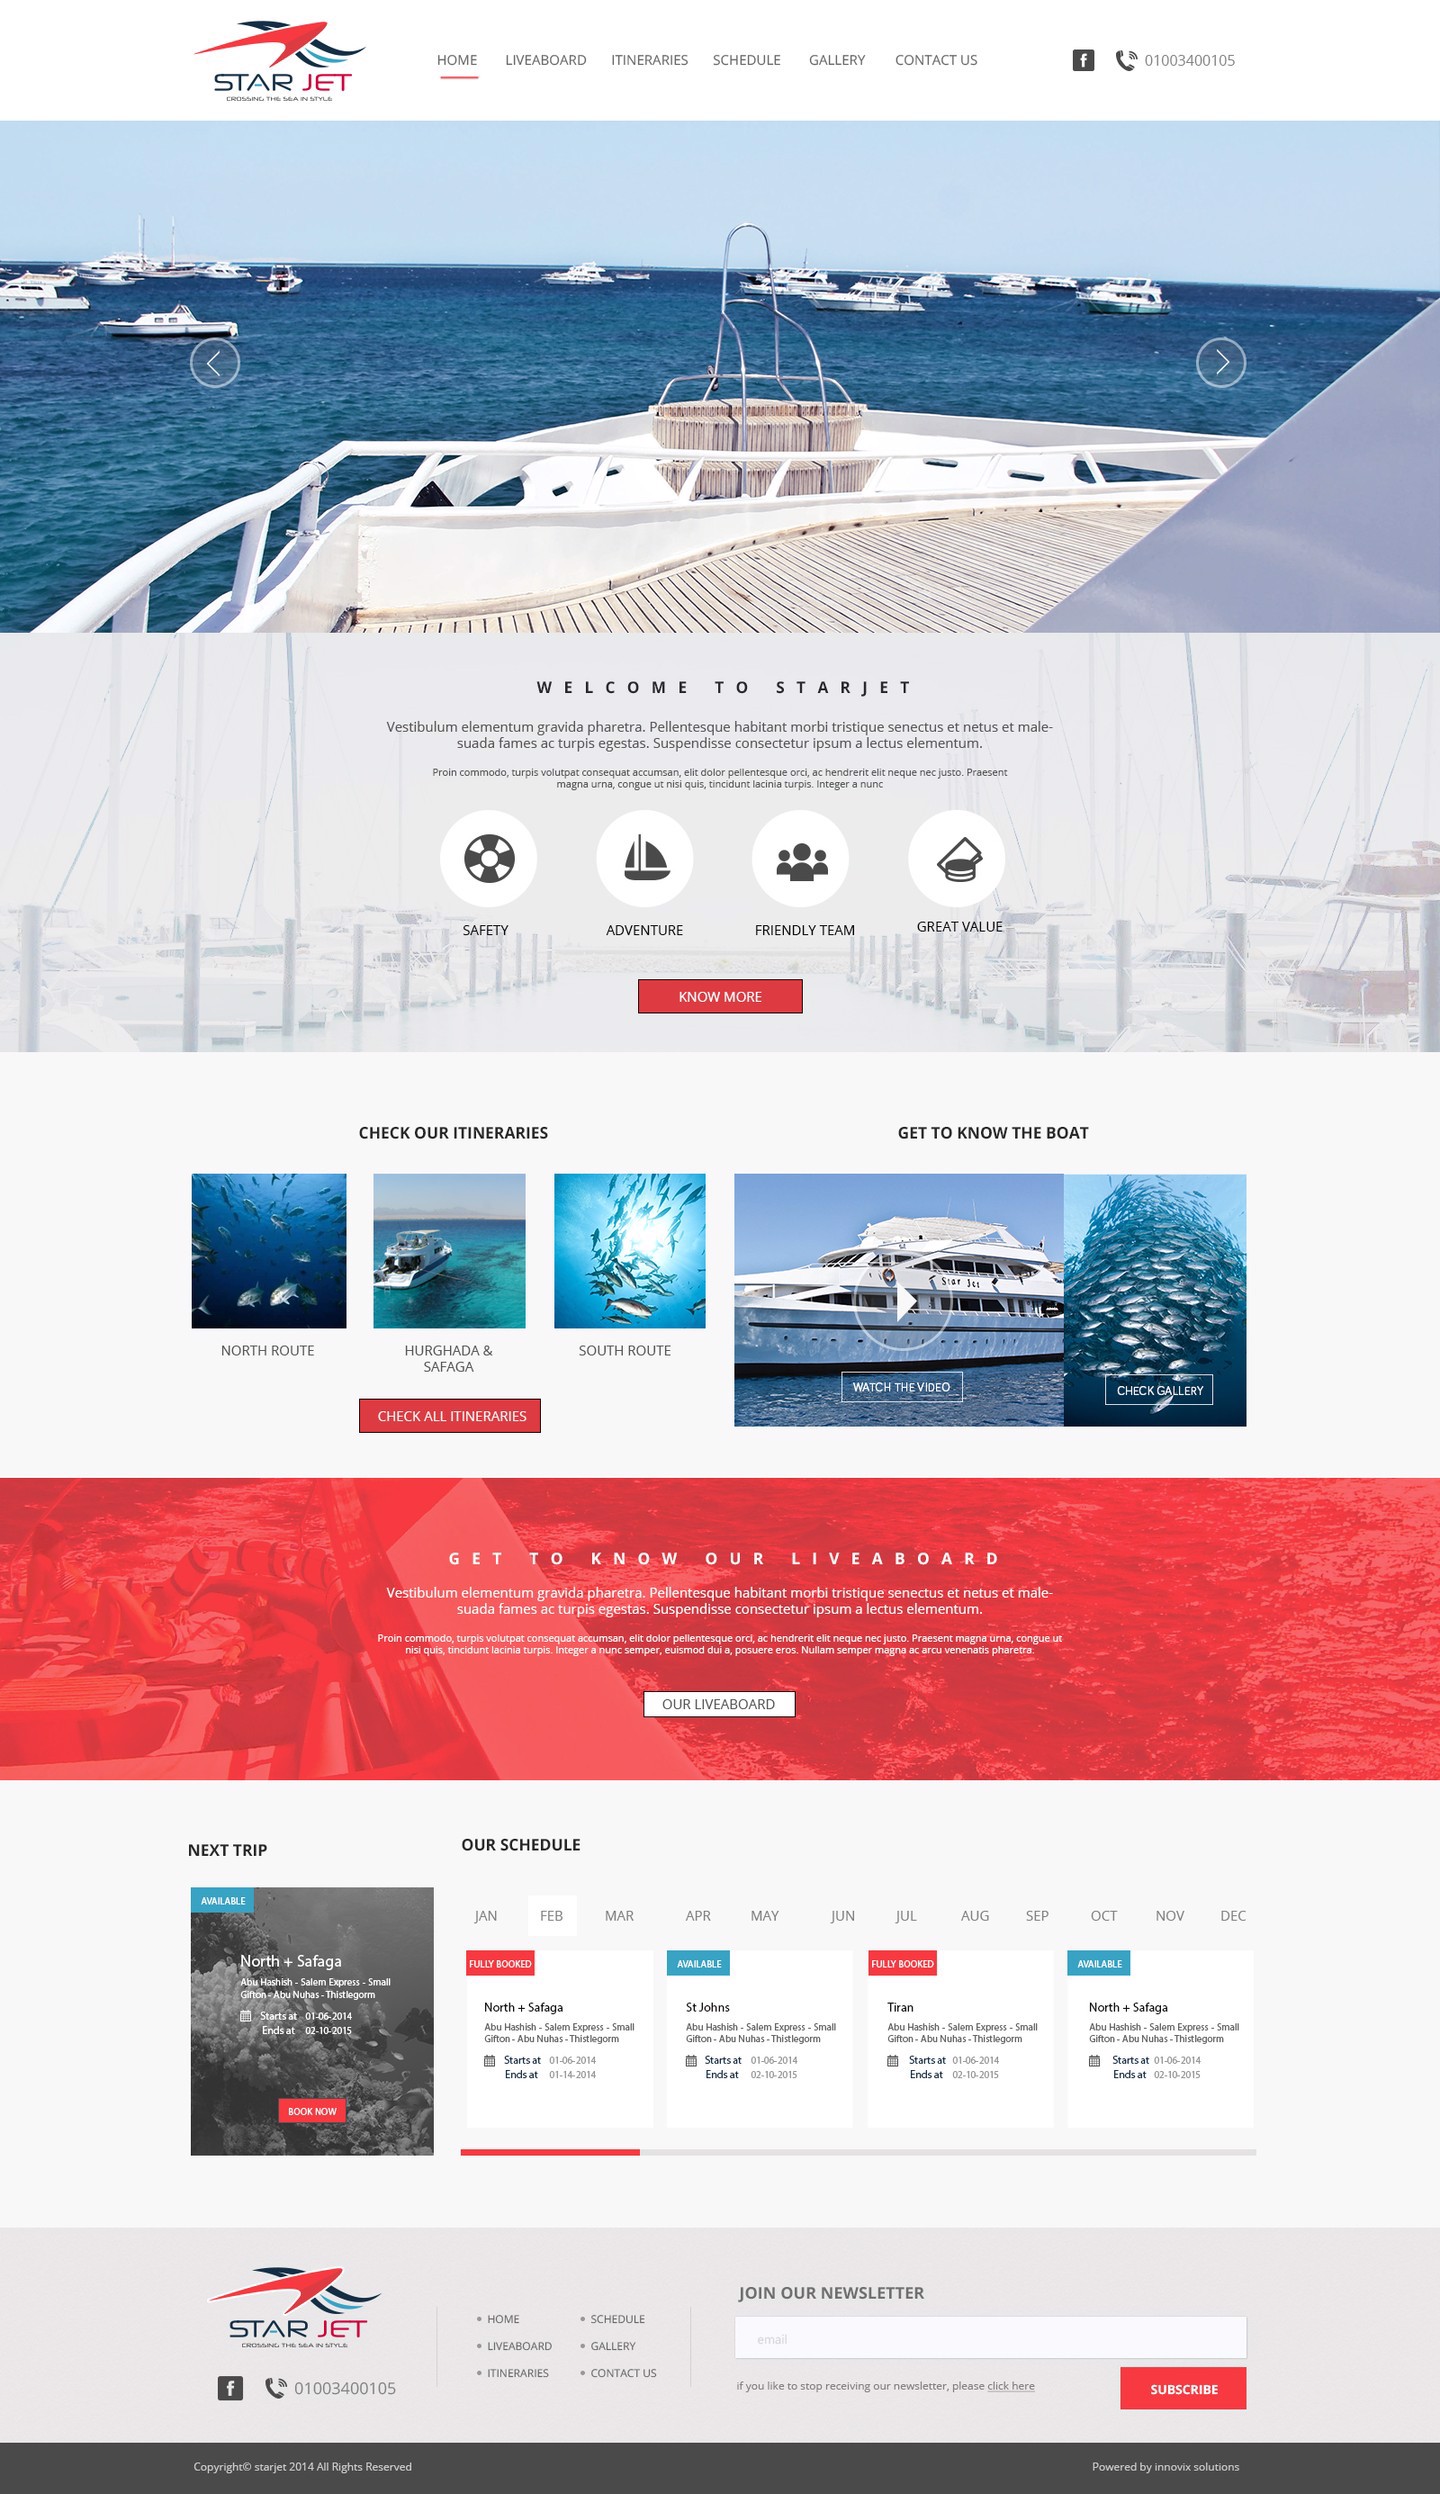 Star Jet Red Sea Website 